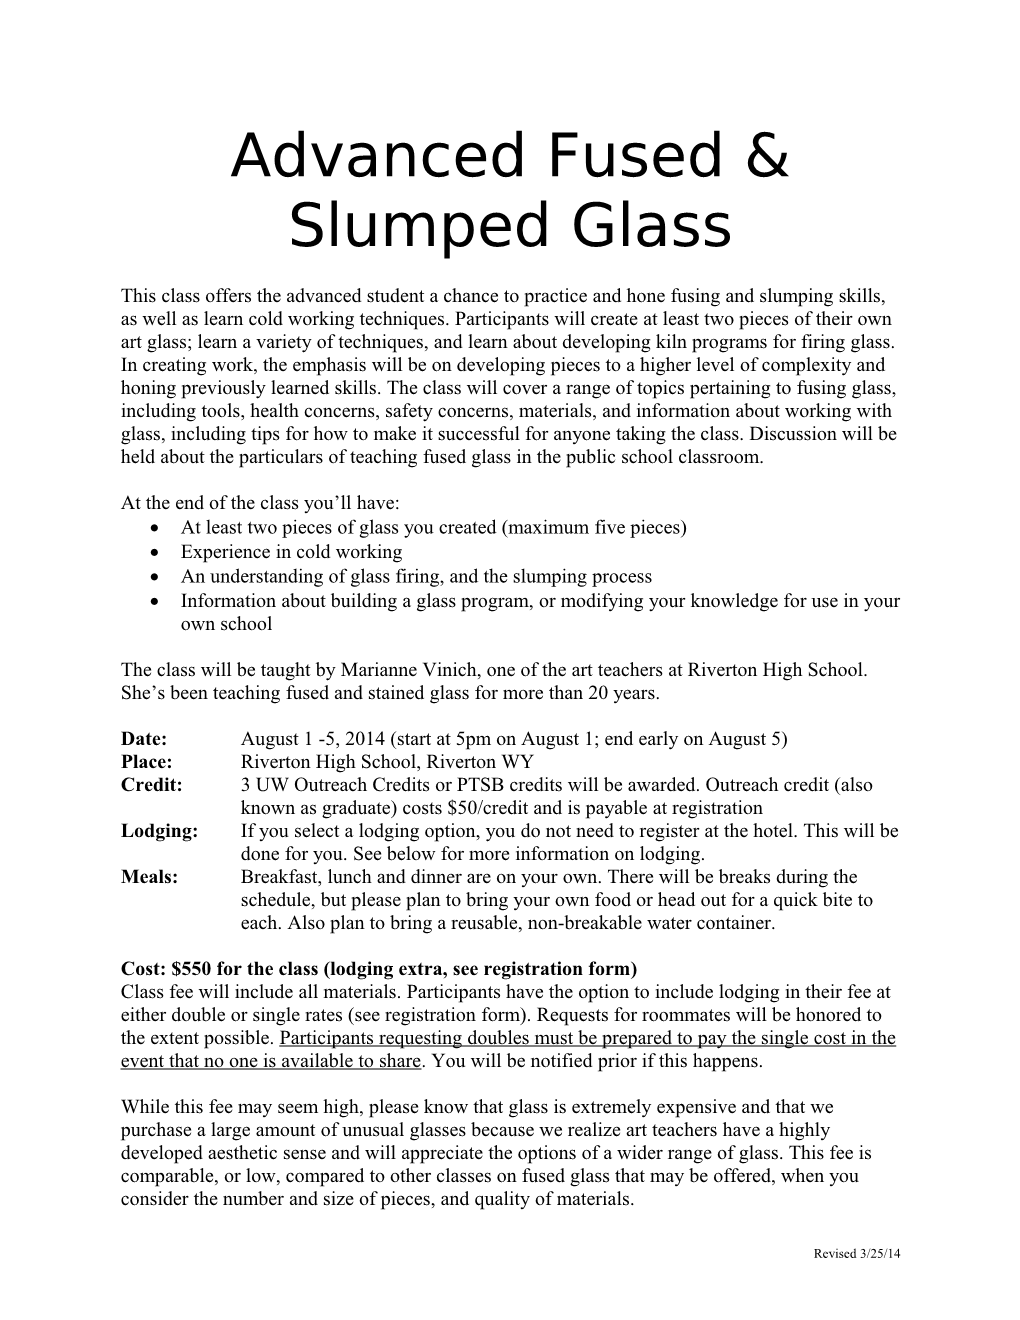 Advanced Fused & Slumped Glass